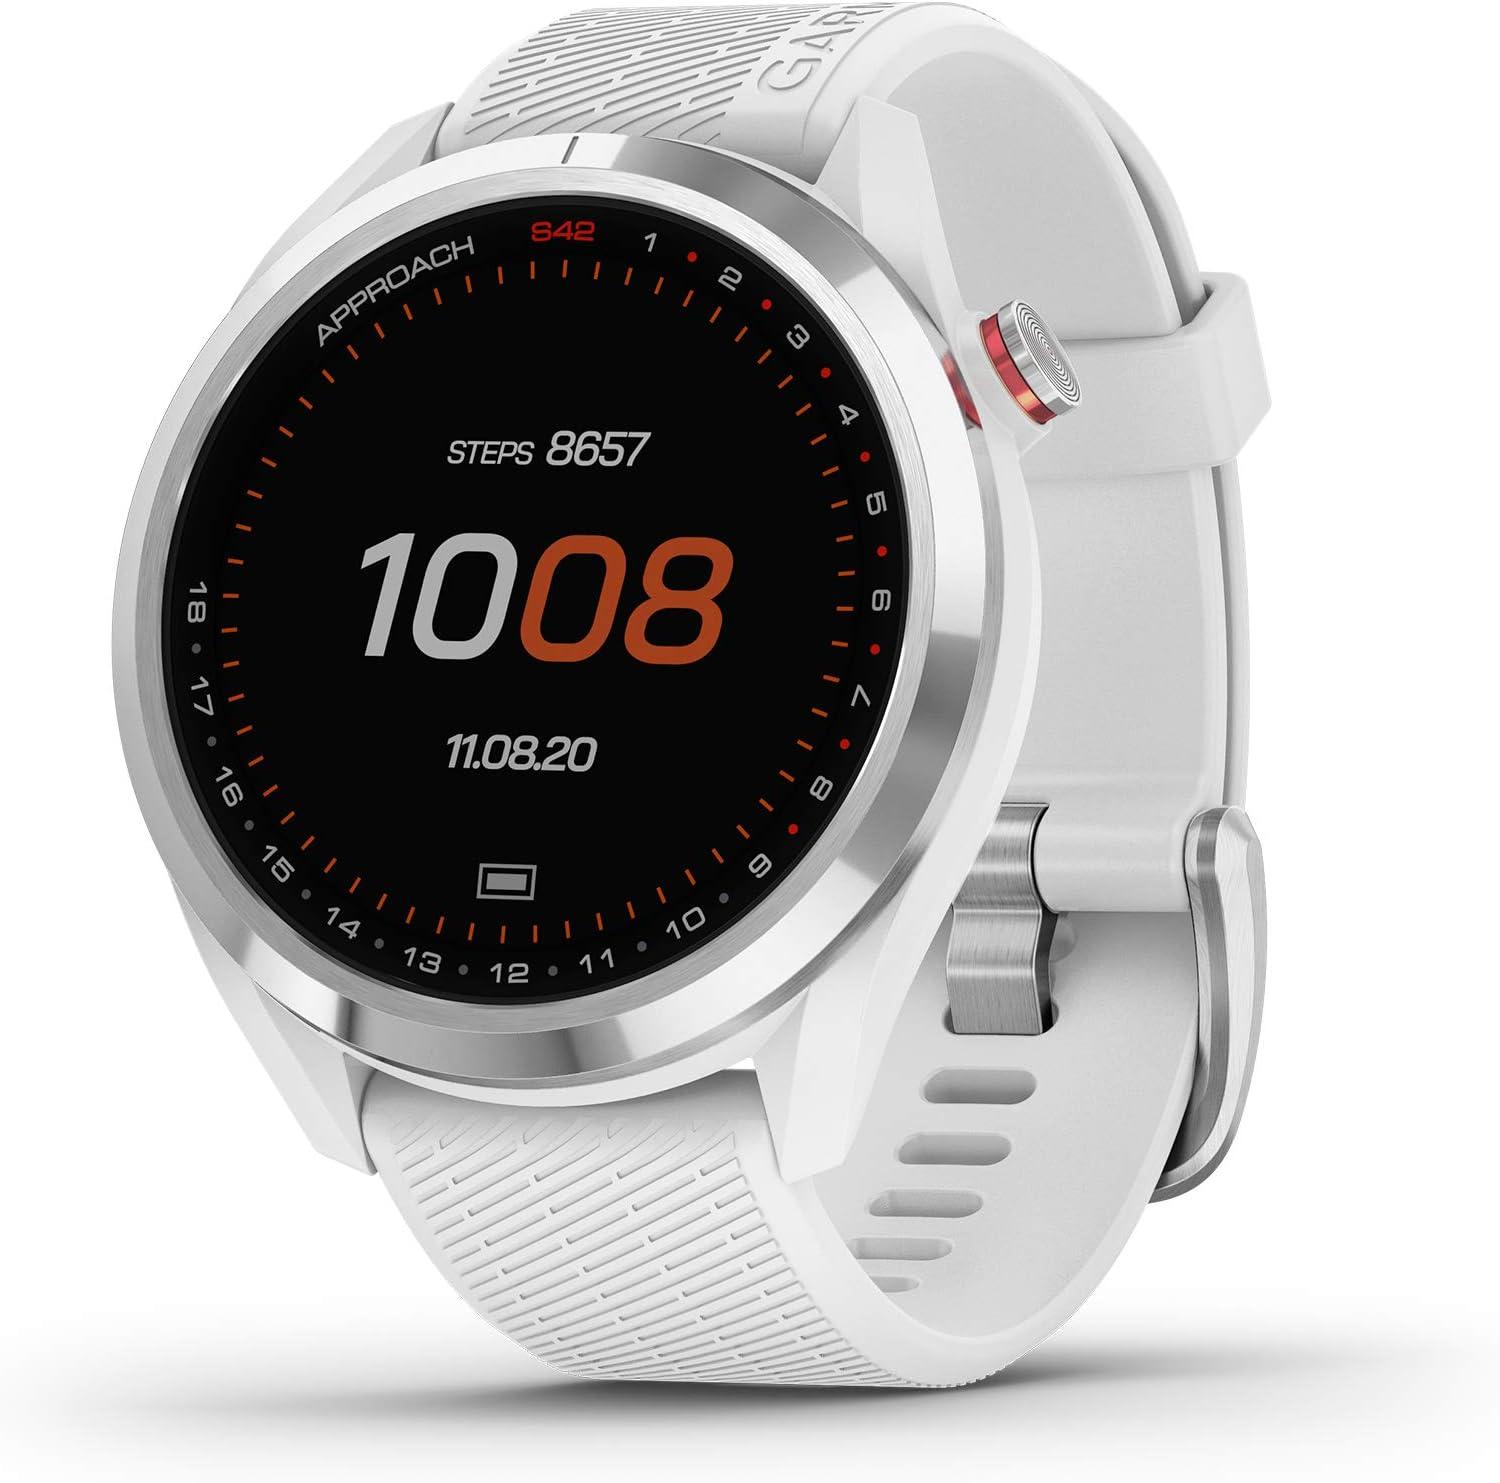 Garmin Approach S42 GPS Golf Smartwatch for $199.99 Shipped